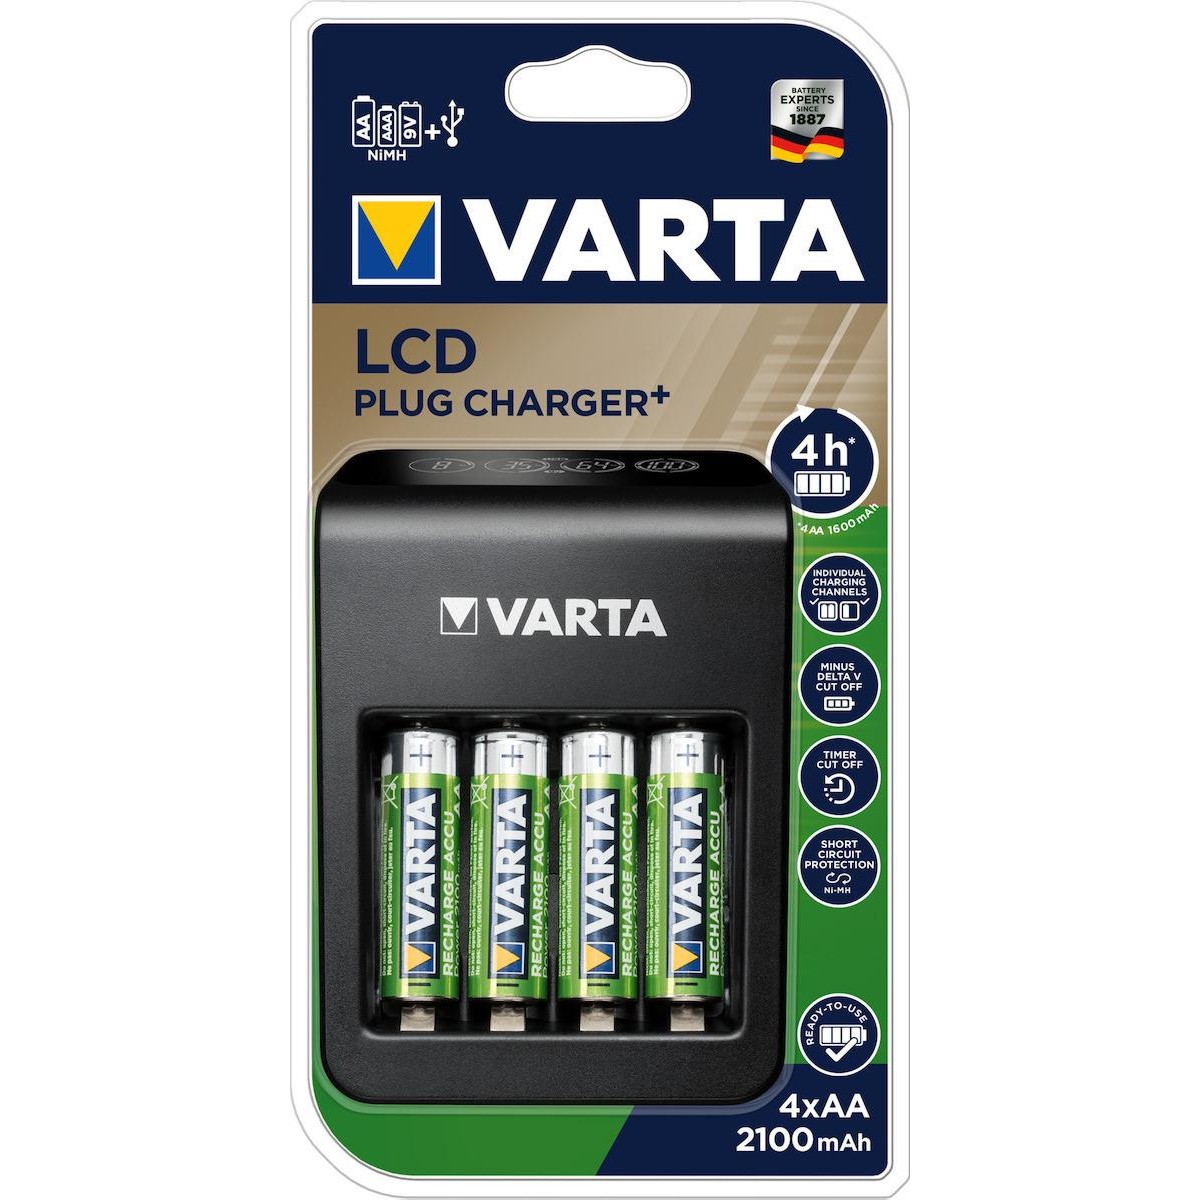 Varta LCD Plug Charger+ incl. 4x Mignon AA batteries 2100 mah (57687101441)